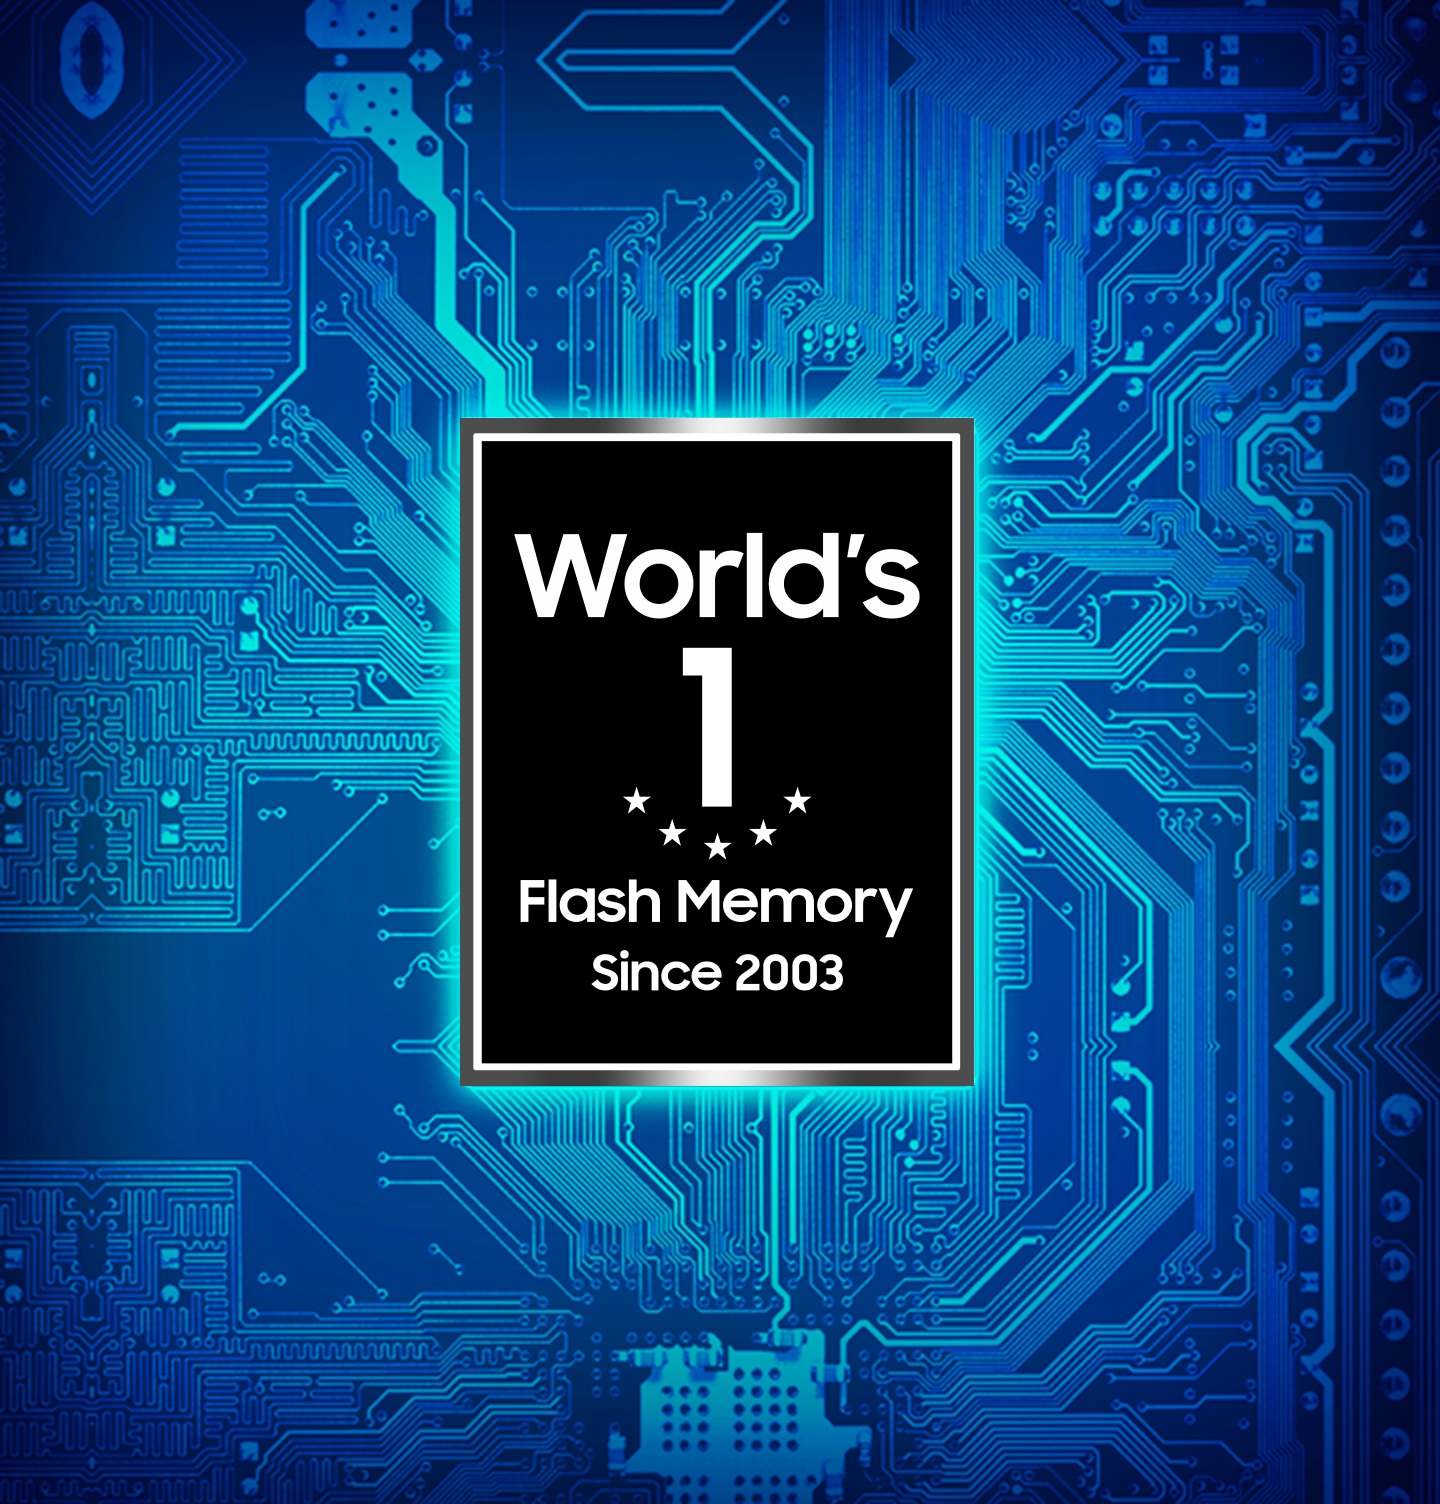 World's No. 1 Flash Memory